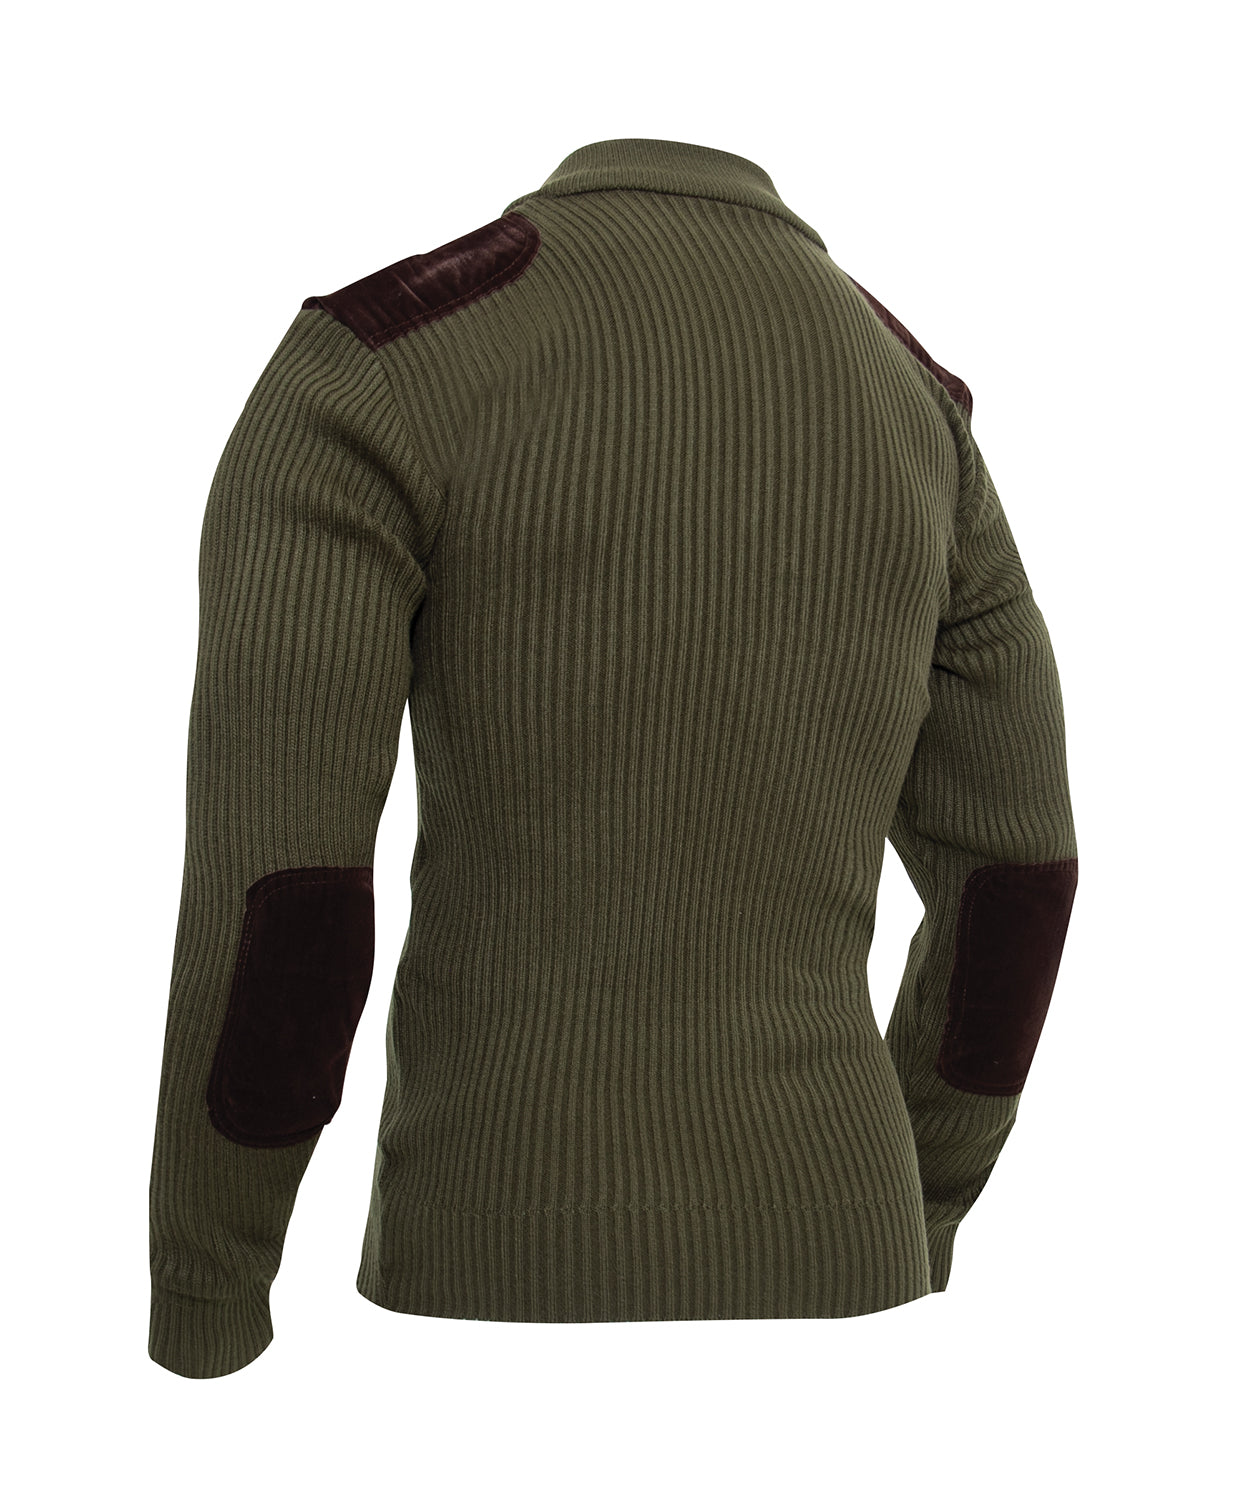 Rothco Quarter Zip Acrylic Commando Sweater - Olive Drab